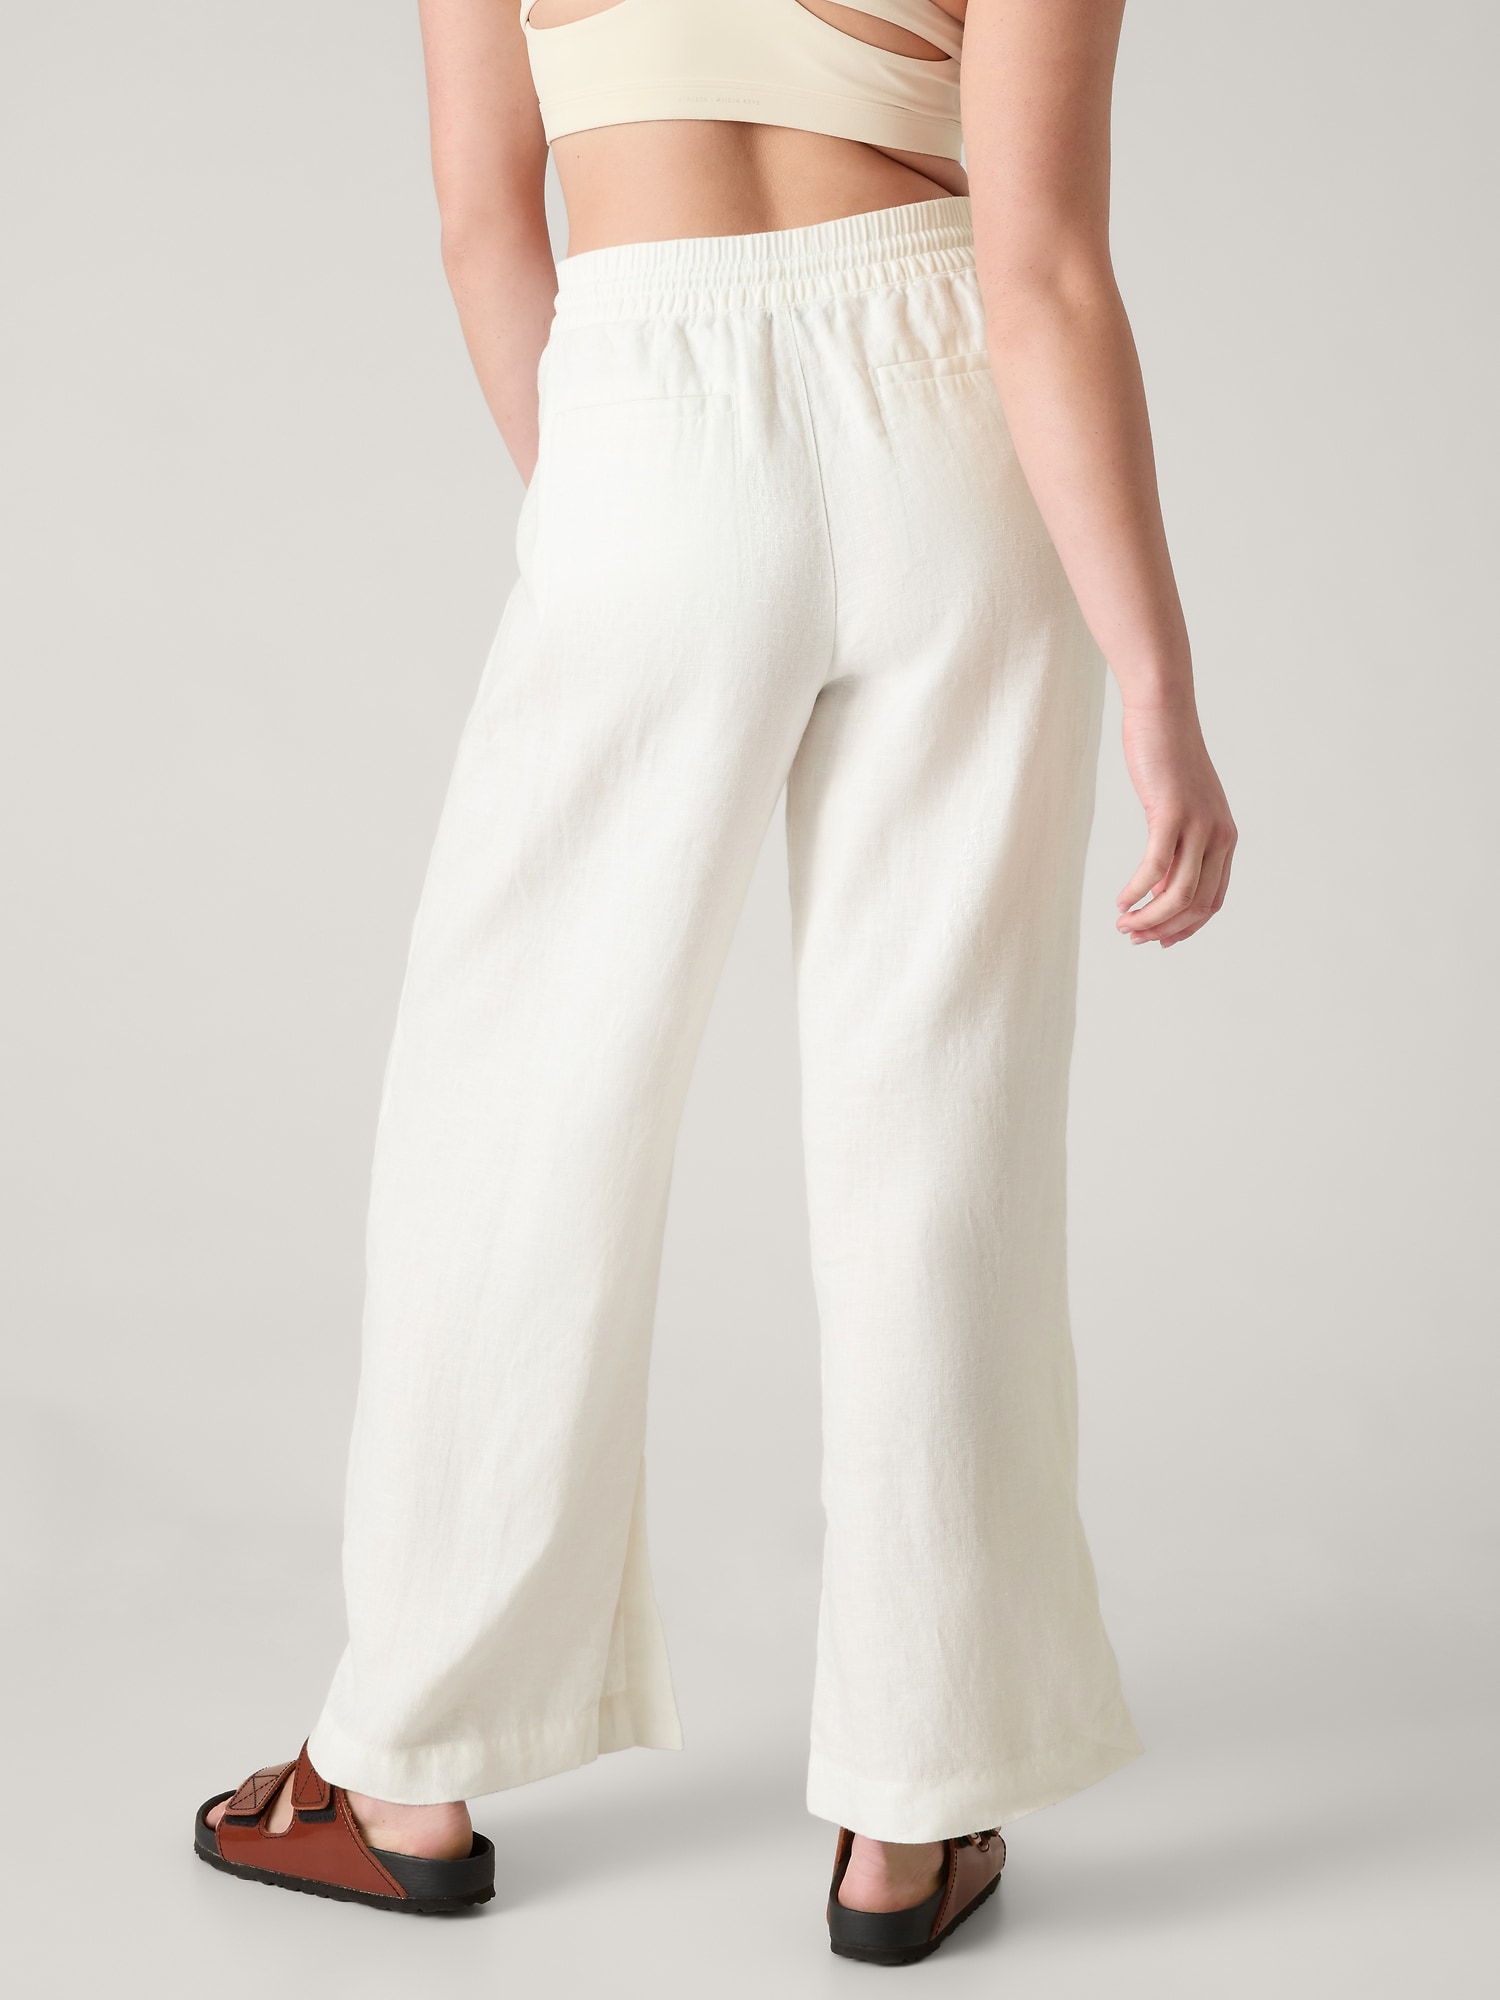 Women's Linen Trousers, White Linen Trousers